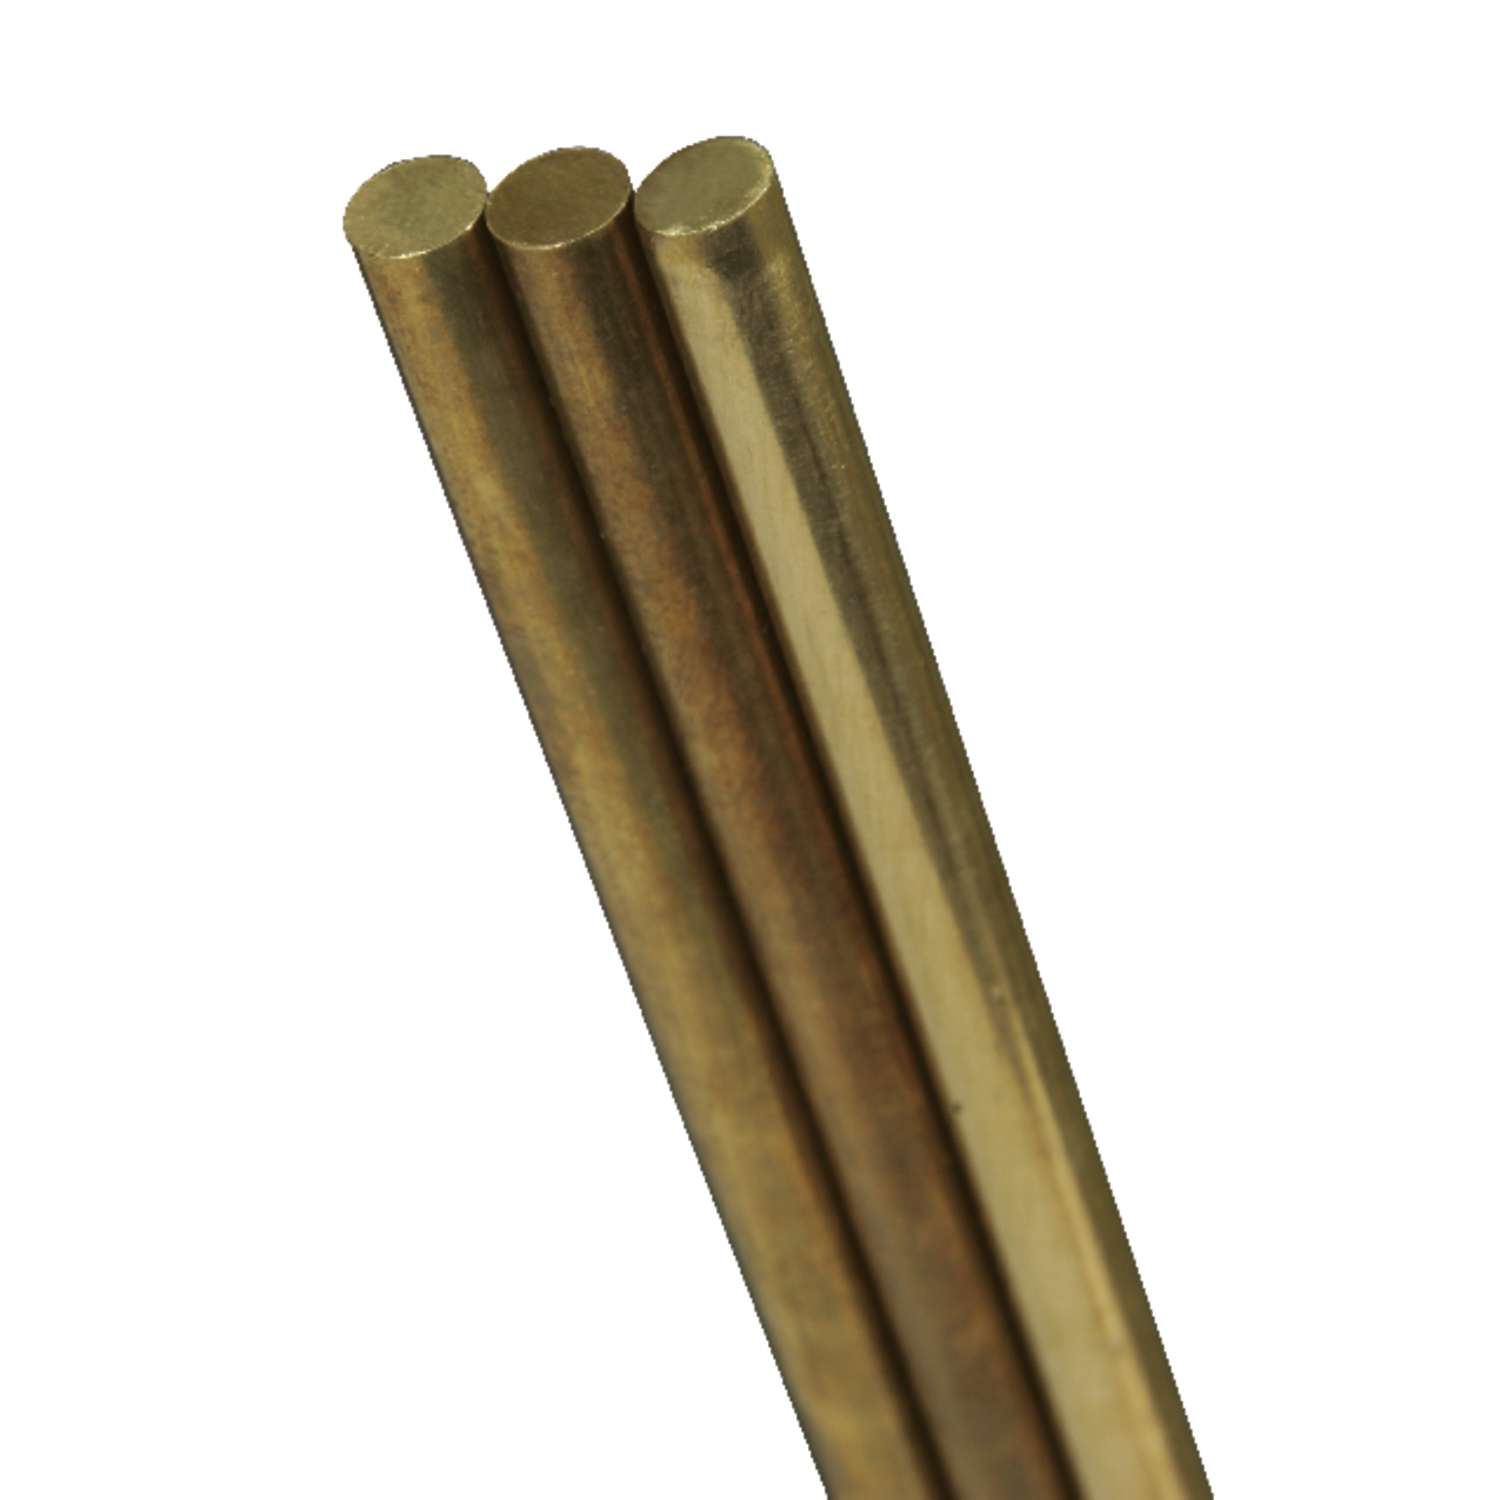 300mm 2.5/2.6/2.7/2.8/3/3.2/3.3/3.5/3.6/3.7/3.8mm brass bar rod H62 solid stick 